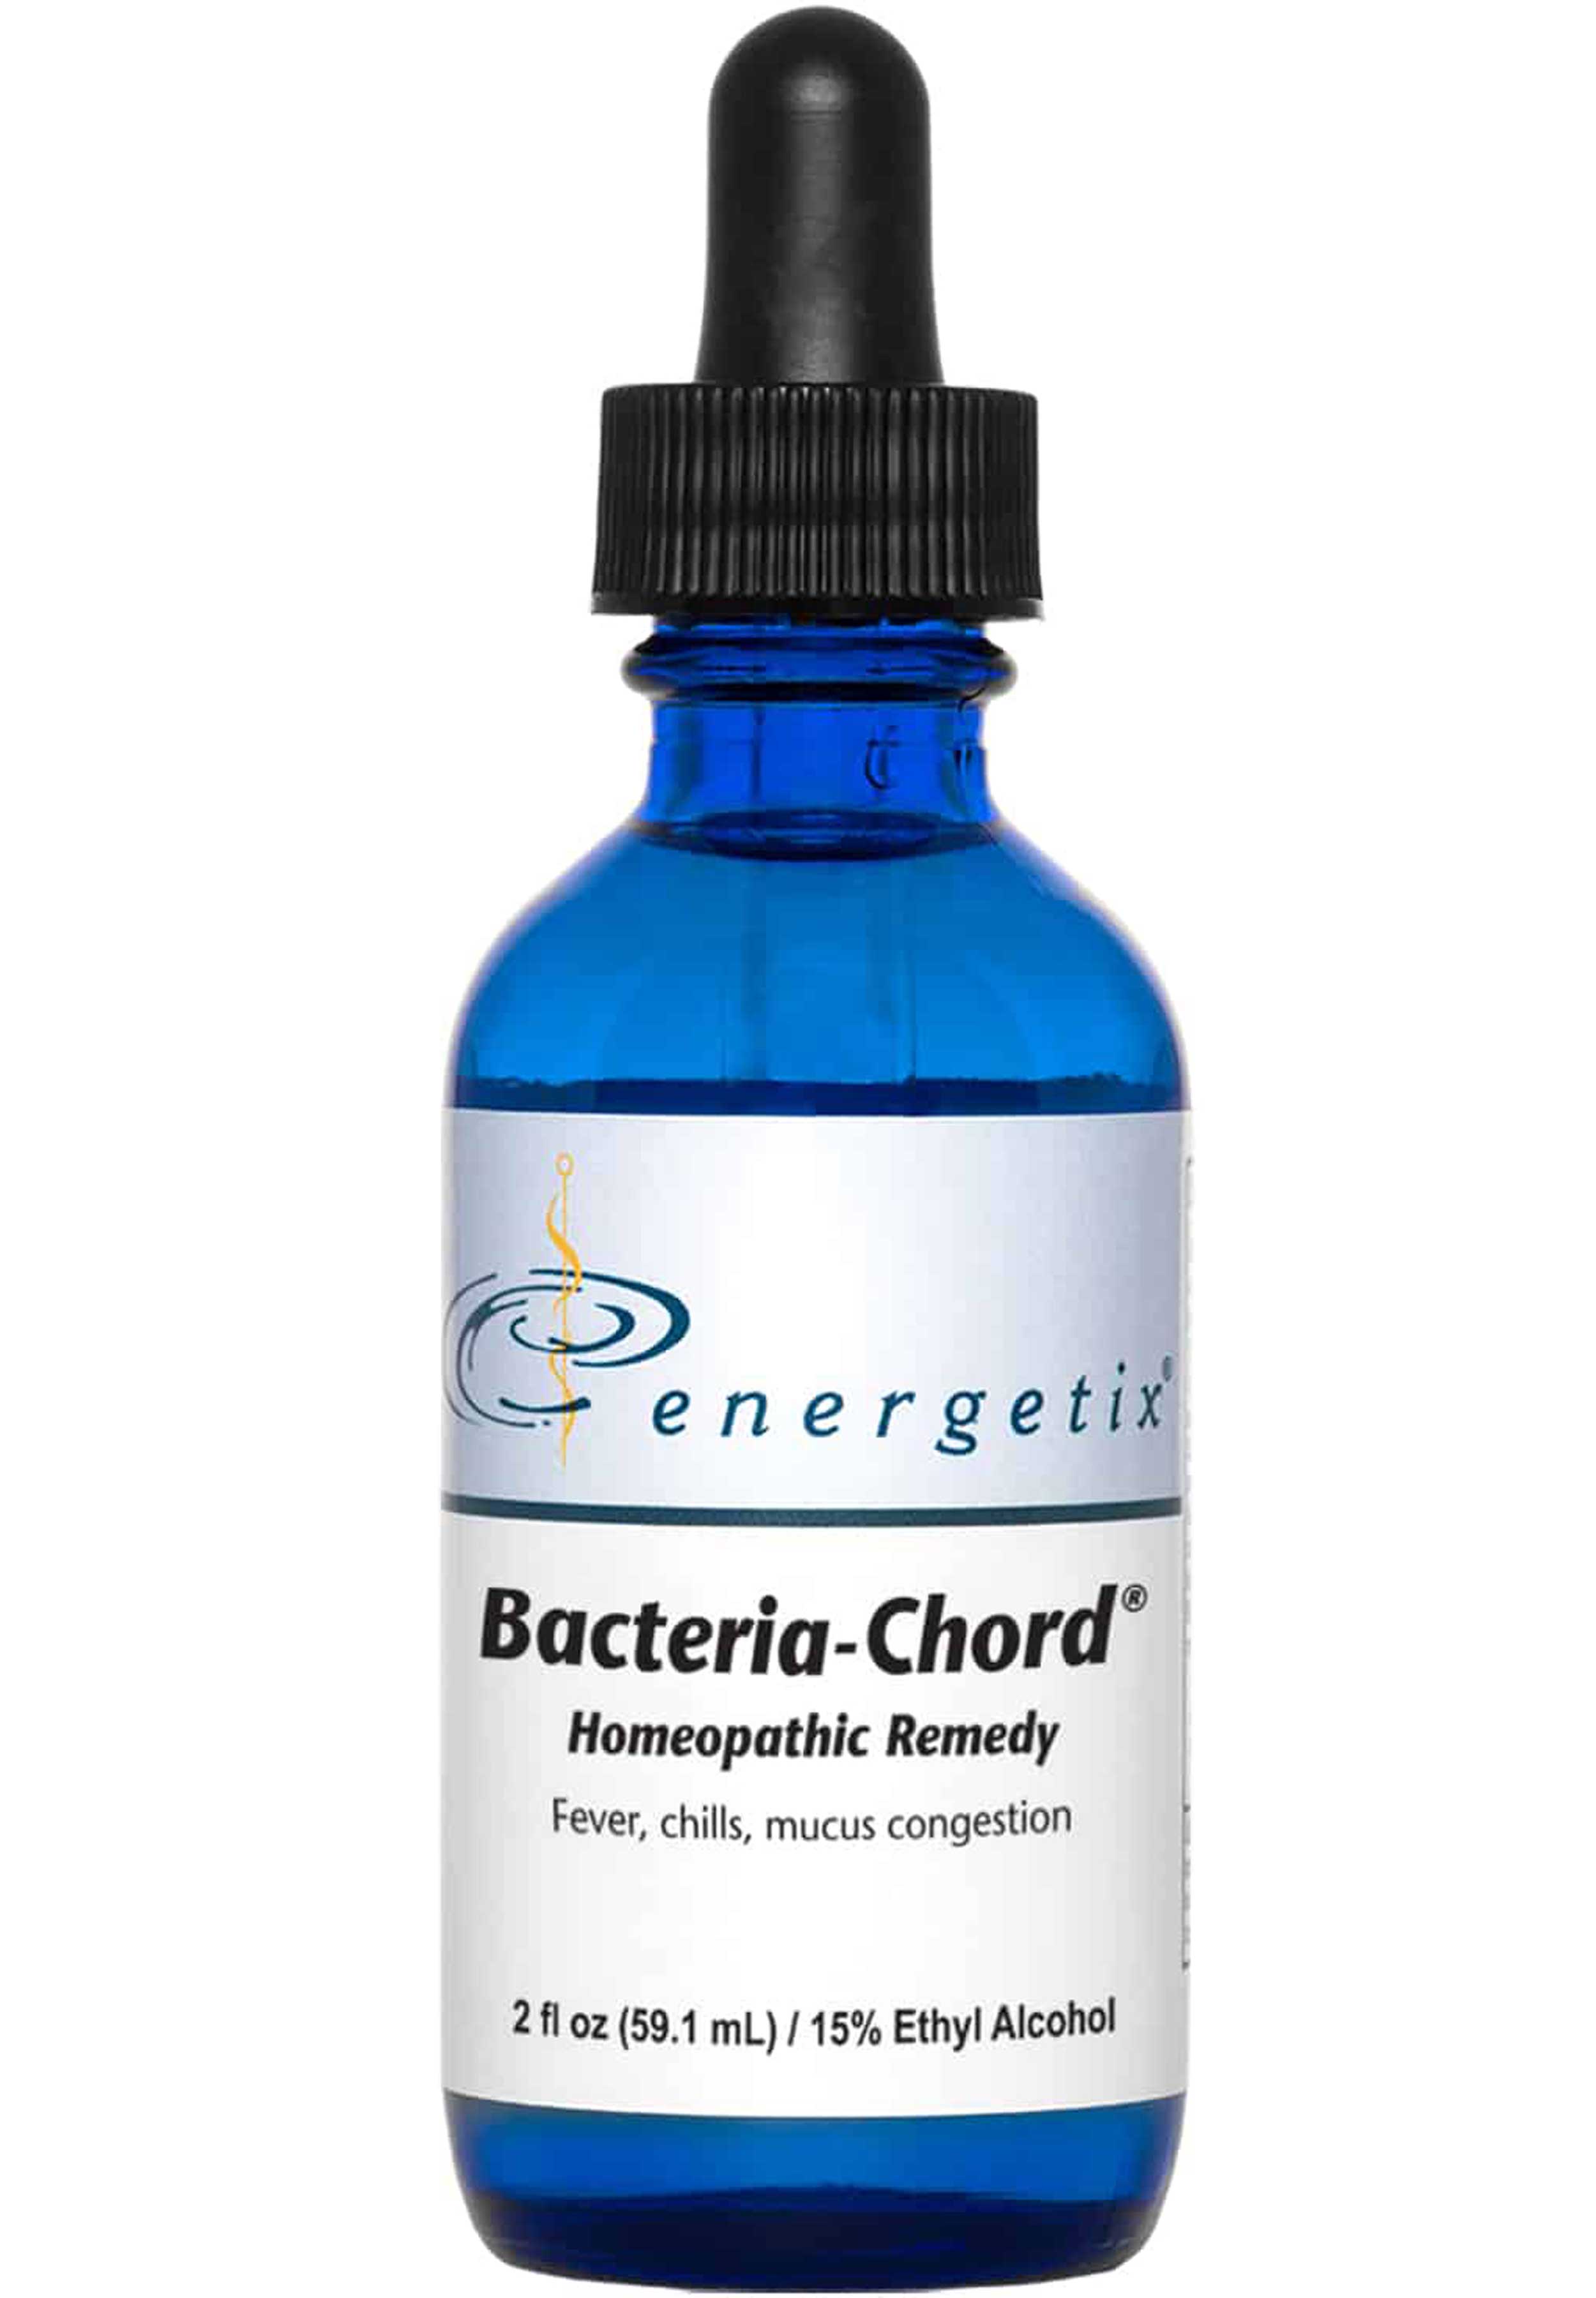 Energetix Bacteria-Chord